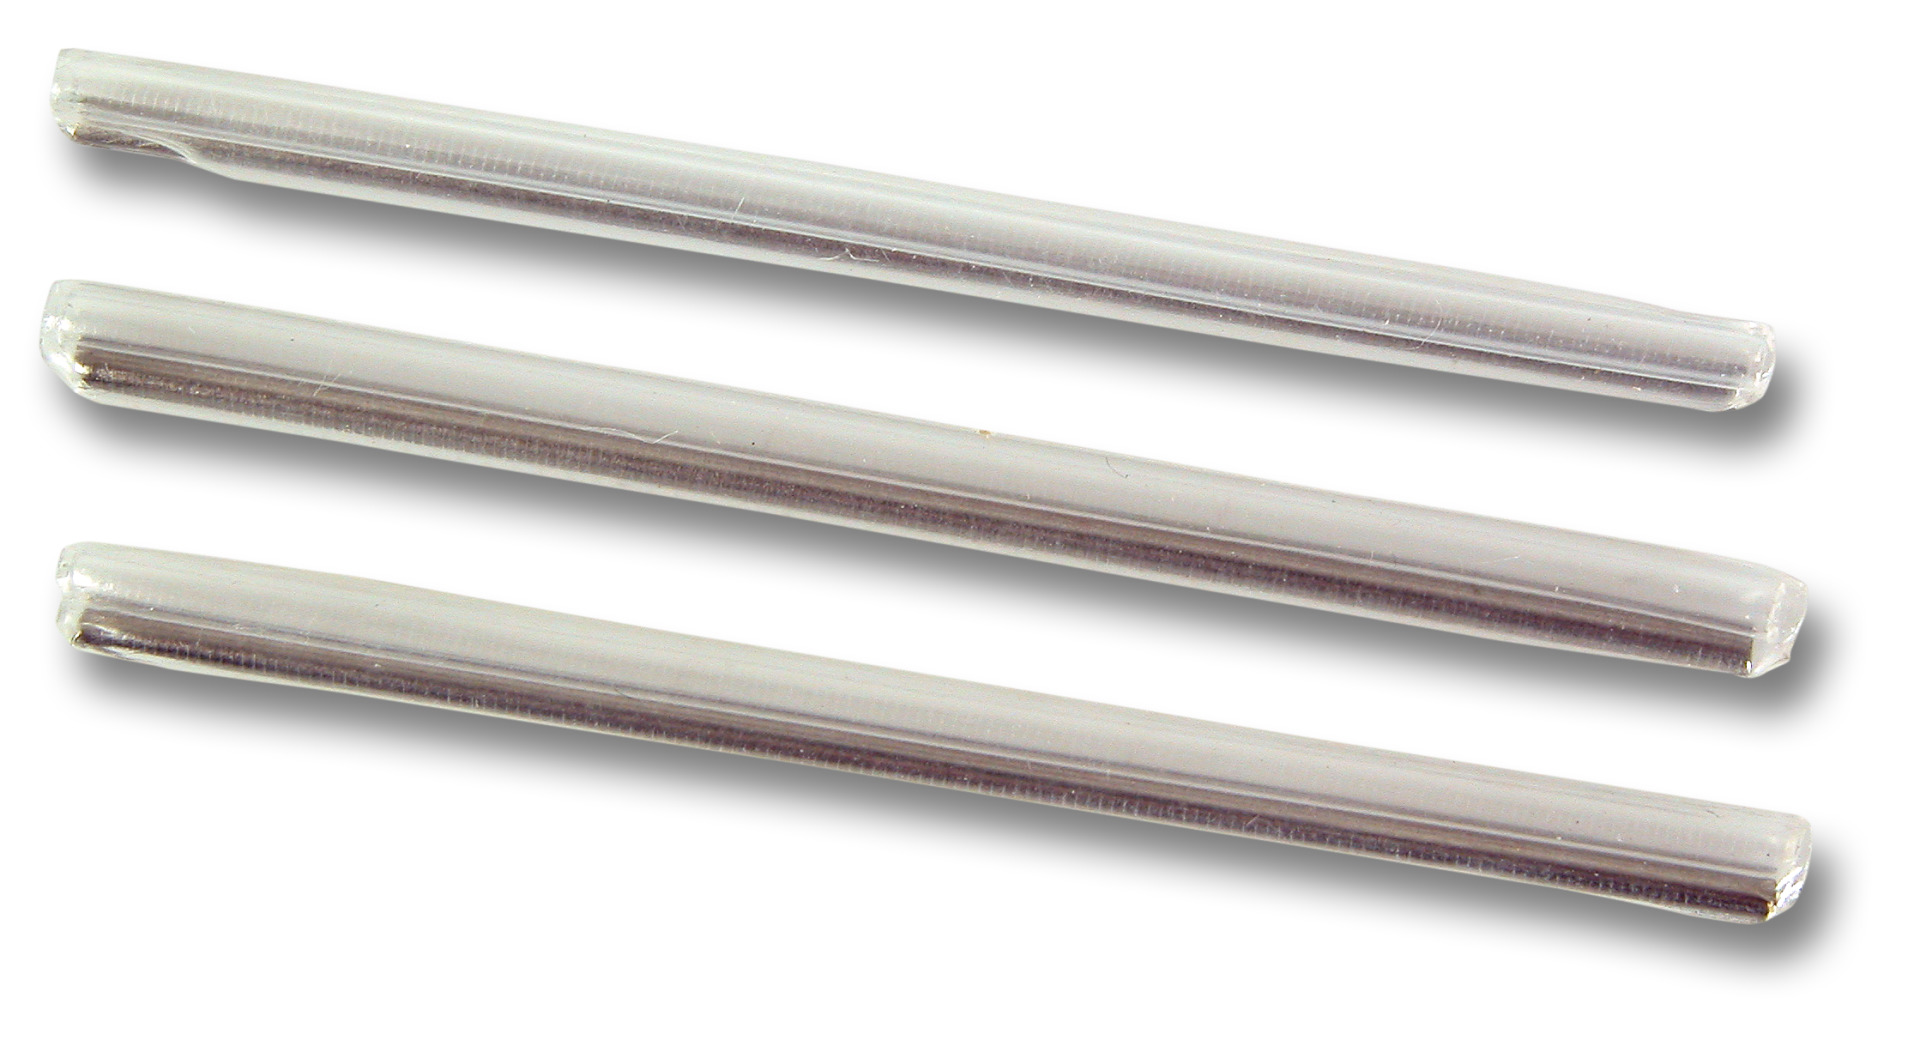 Splice Heat Shrink, transparent, length: 45mm, PU 100